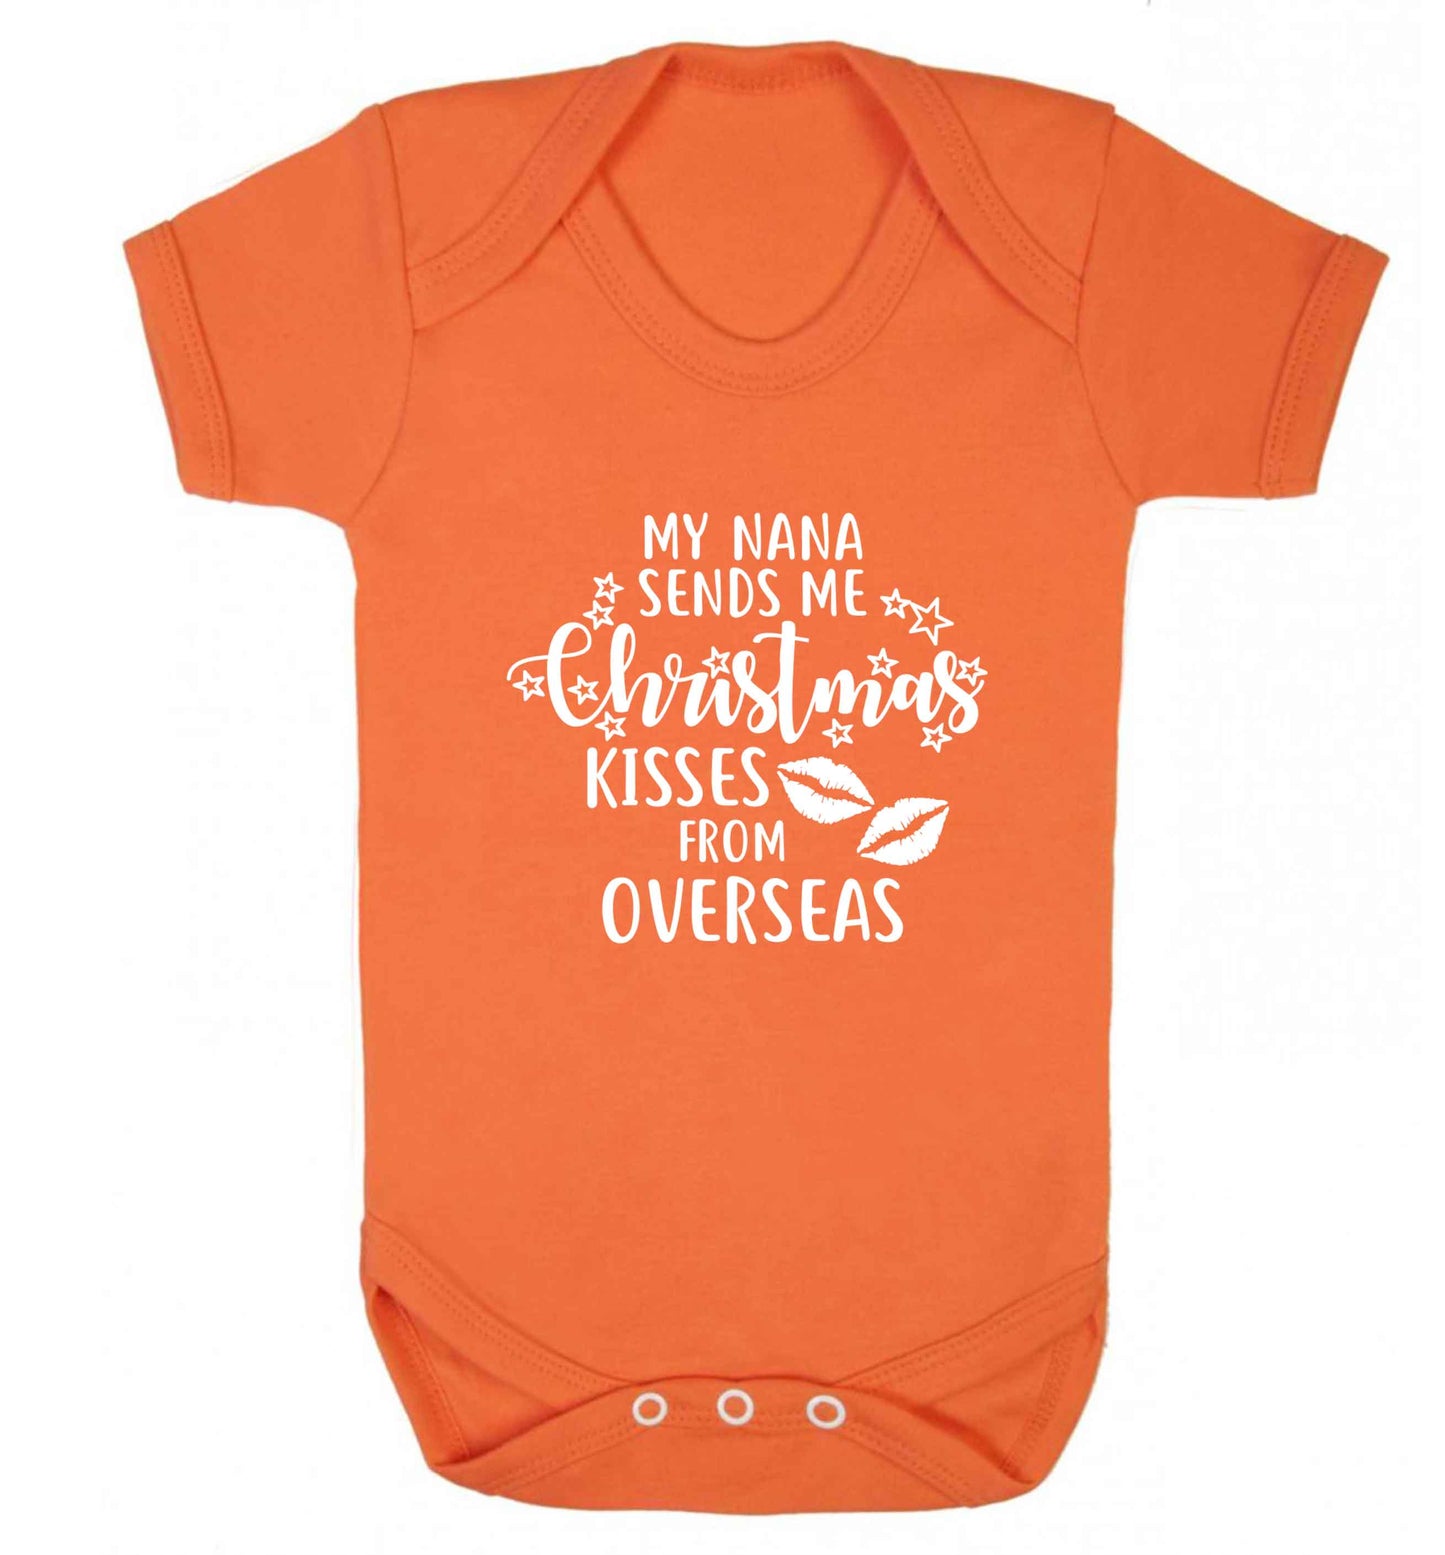 Grandma Christmas Kisses Overseas baby vest orange 18-24 months